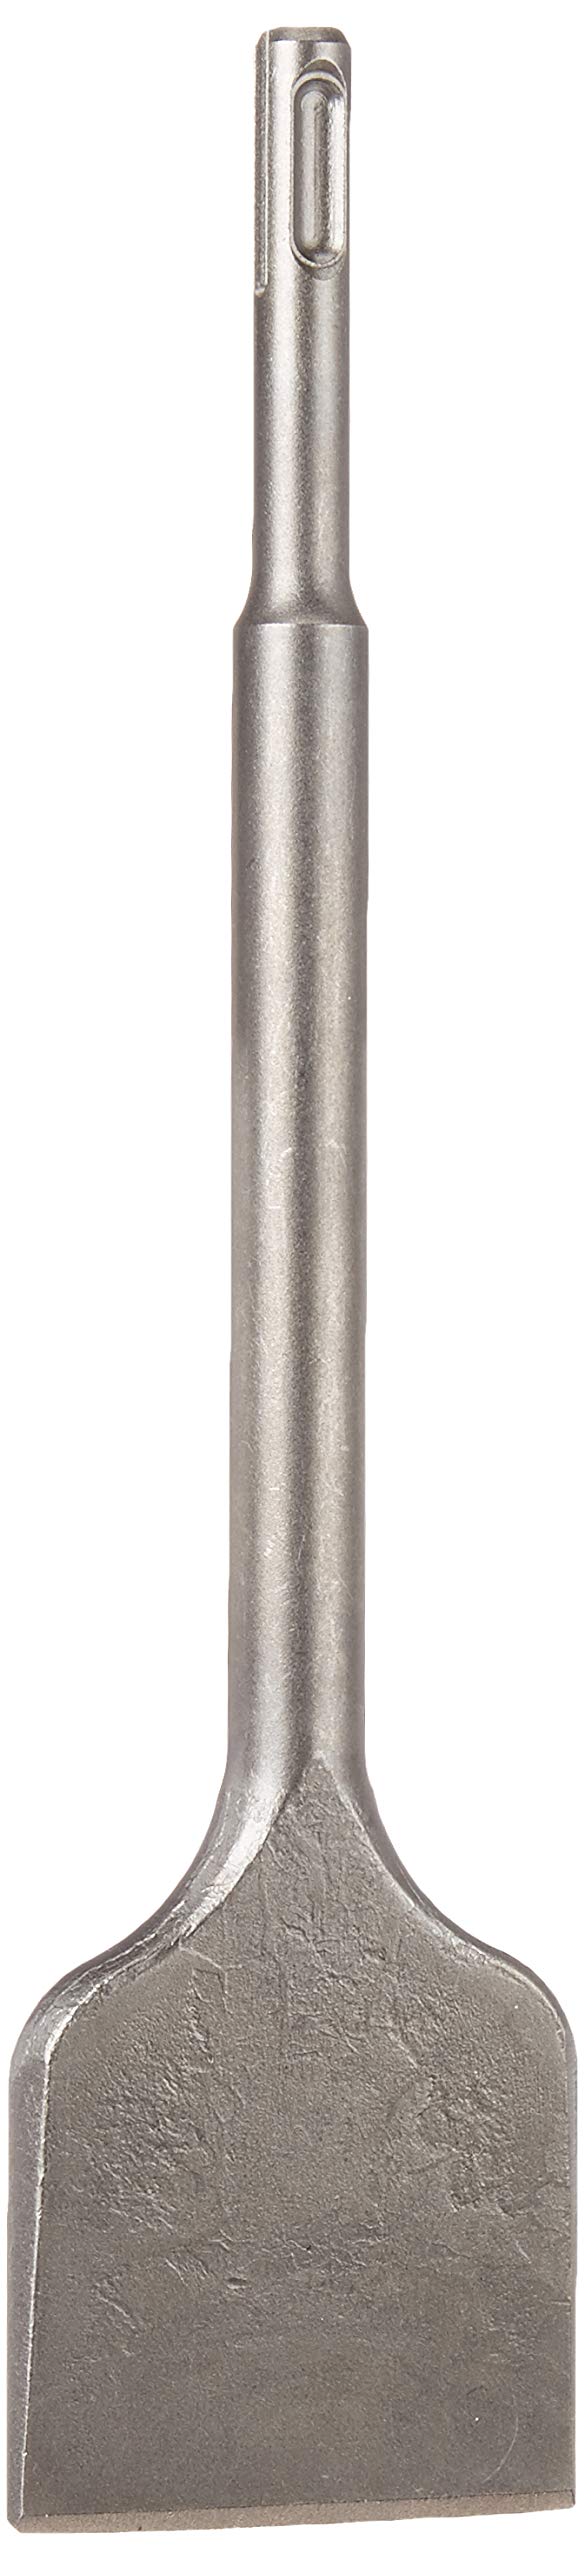 Bosch HS1427 SDS-Plus Hammer Shank 2-1/2-Inch by 10-Inch Wide Steel Self-Sharpening Chisel - NewNest Australia